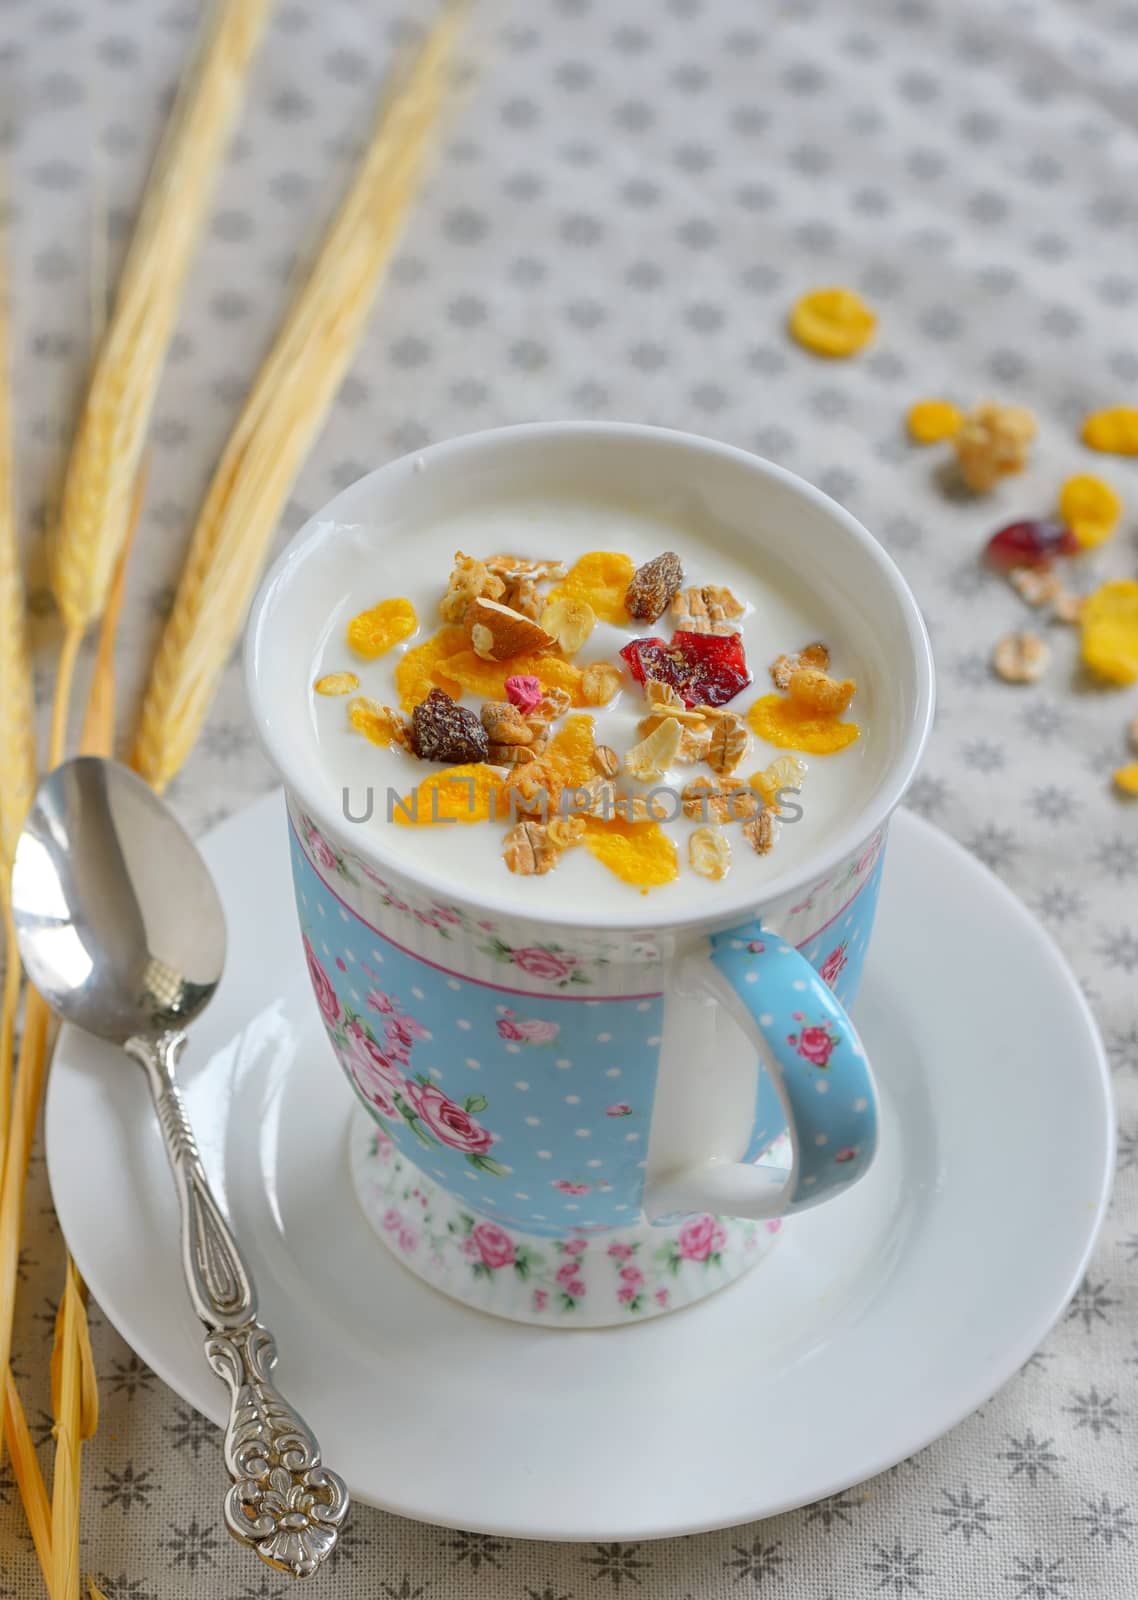 Cup of yogurt with crunchy cereals